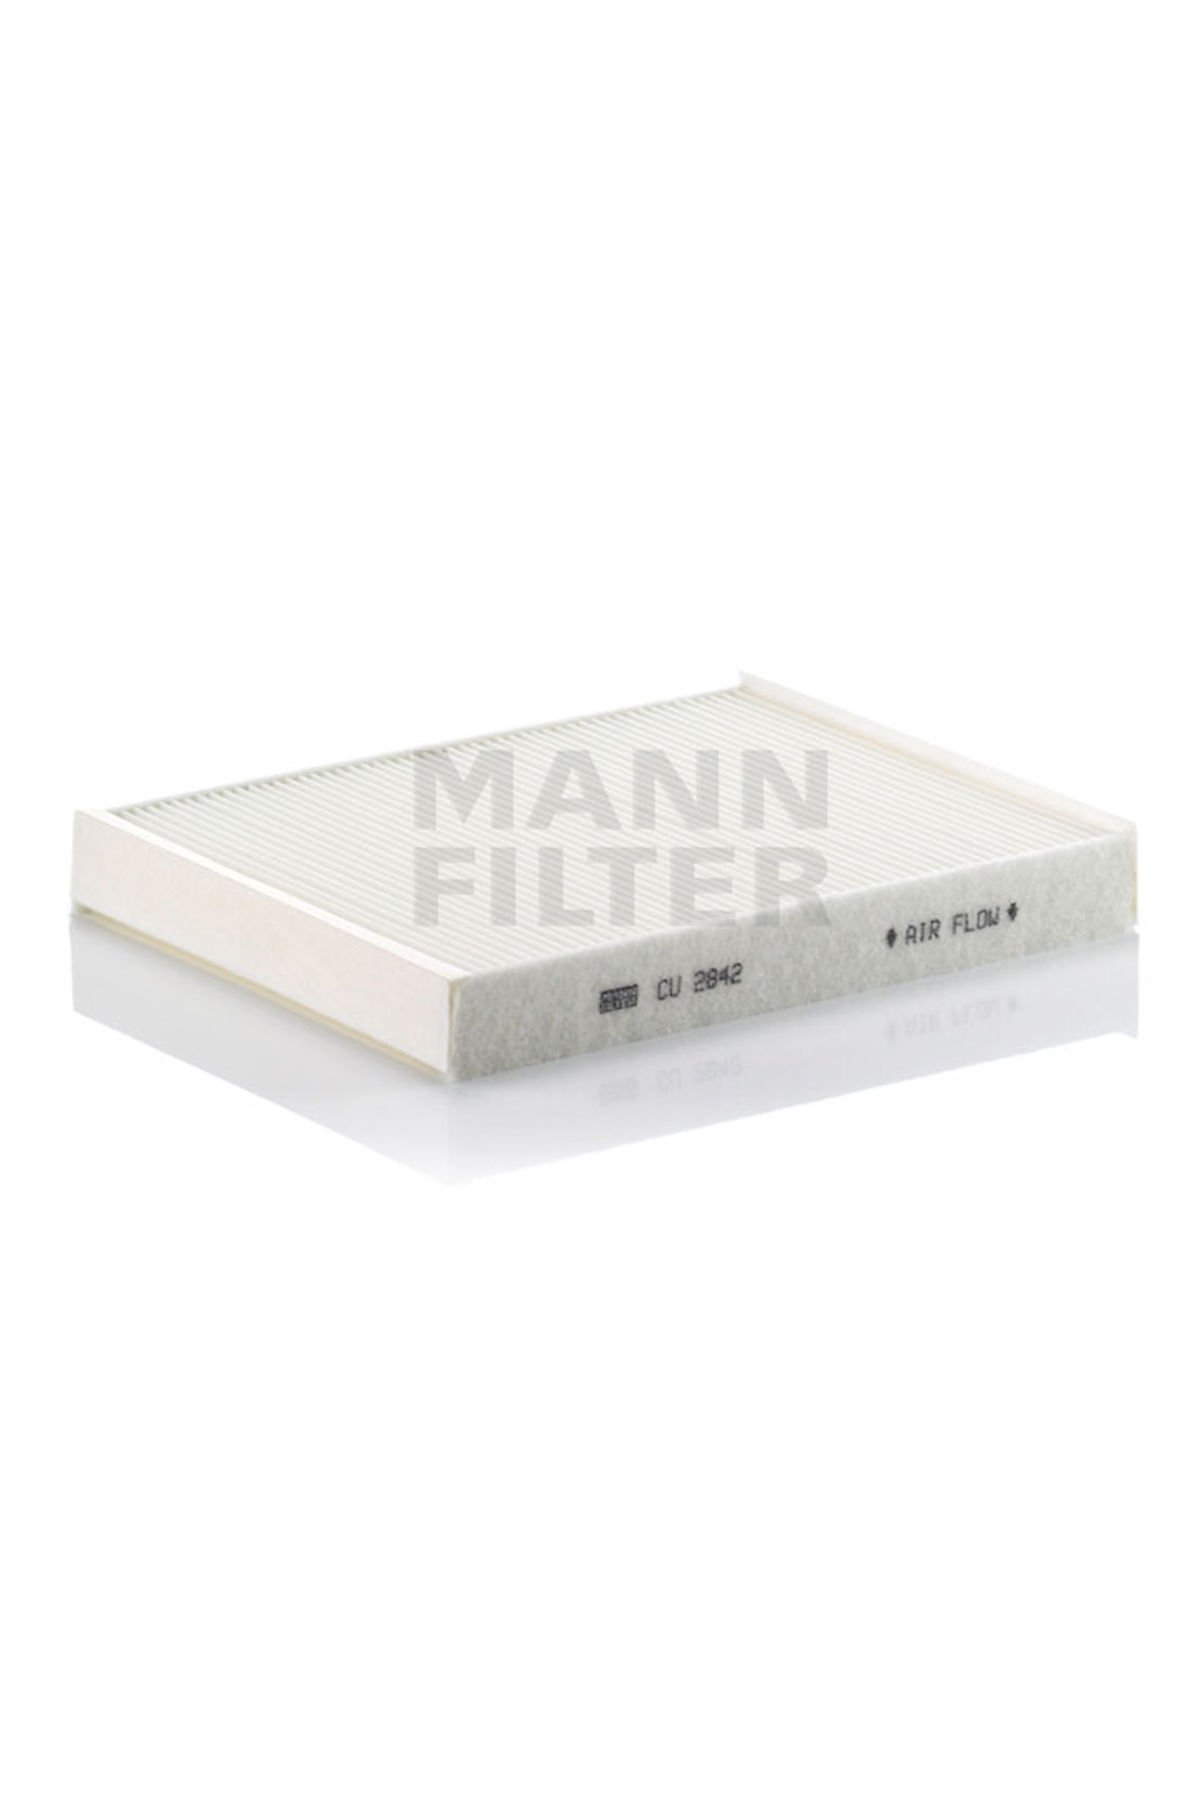 VW Amarok Polen Filtresi 2011-2020 Mann Filter